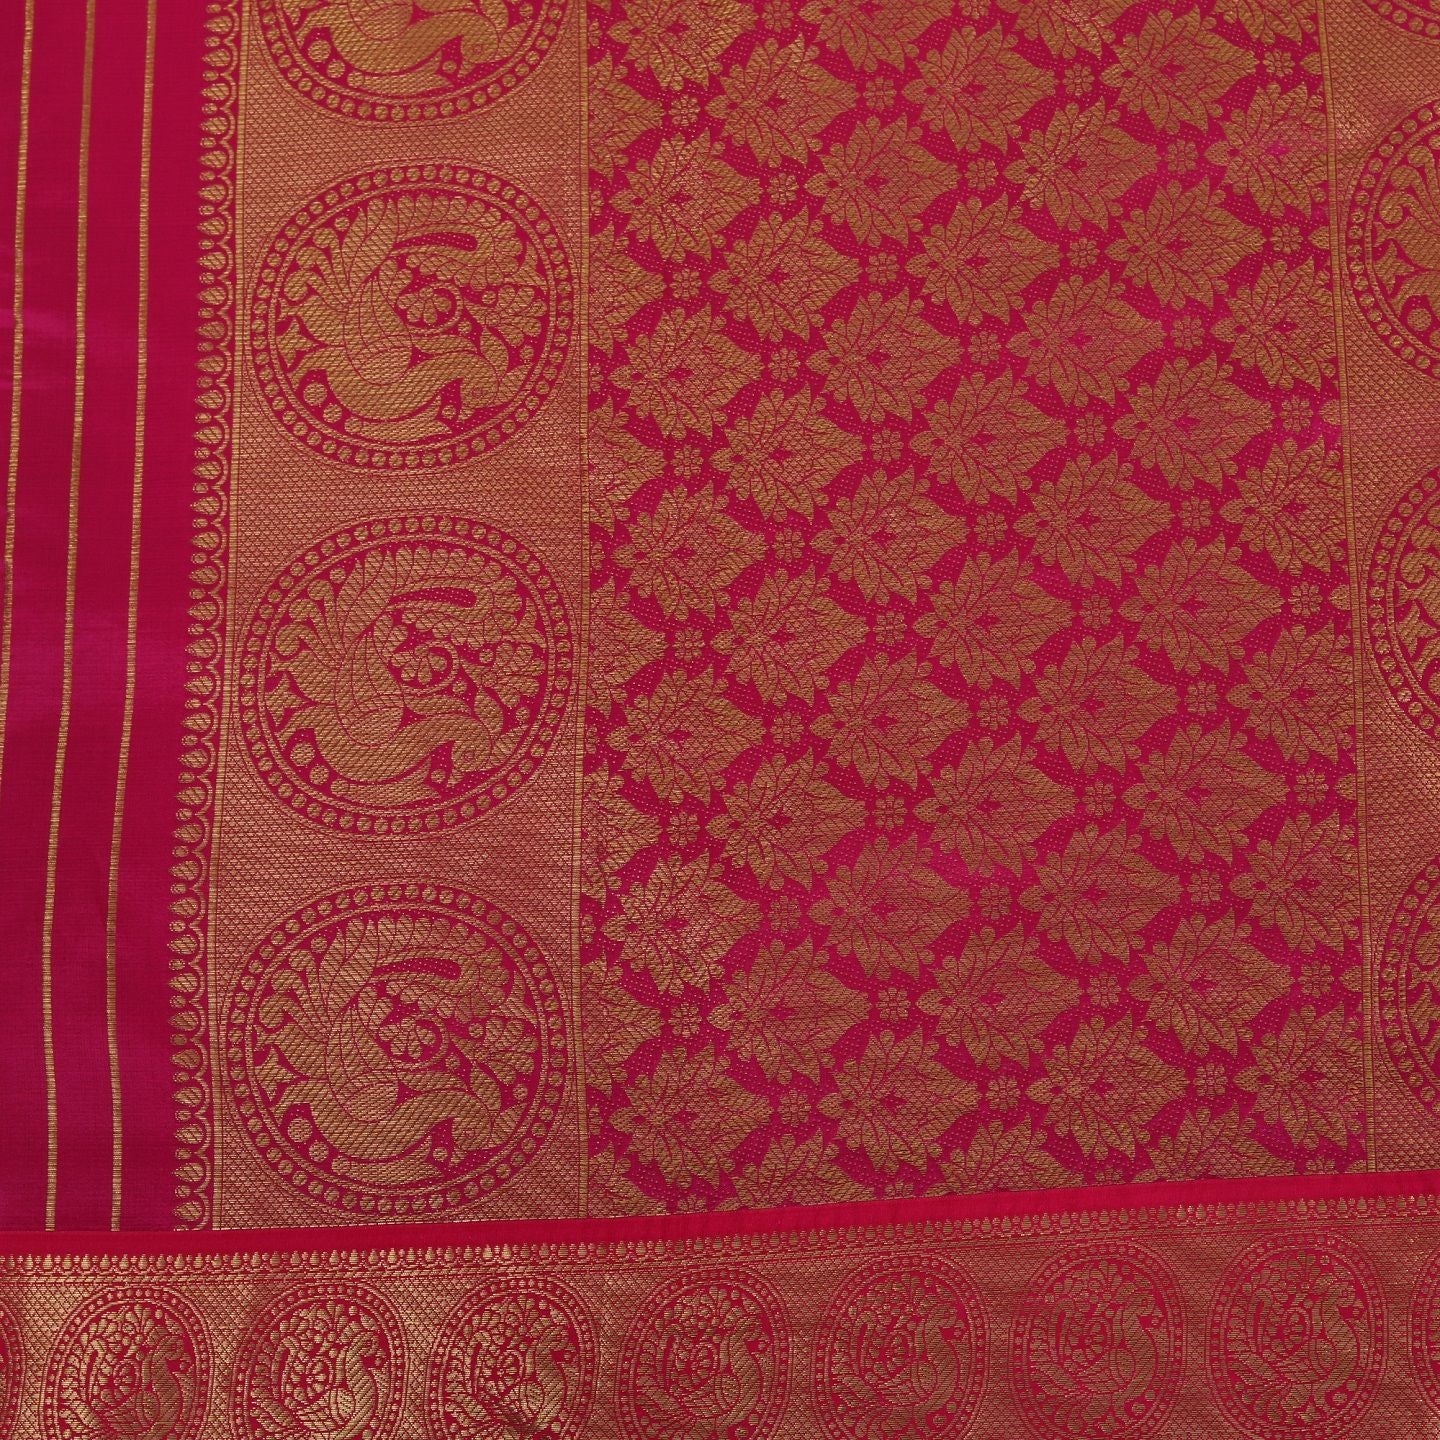 Black And Gold Zari Toned Wedding Kanchipuram Pattu Silk Saree